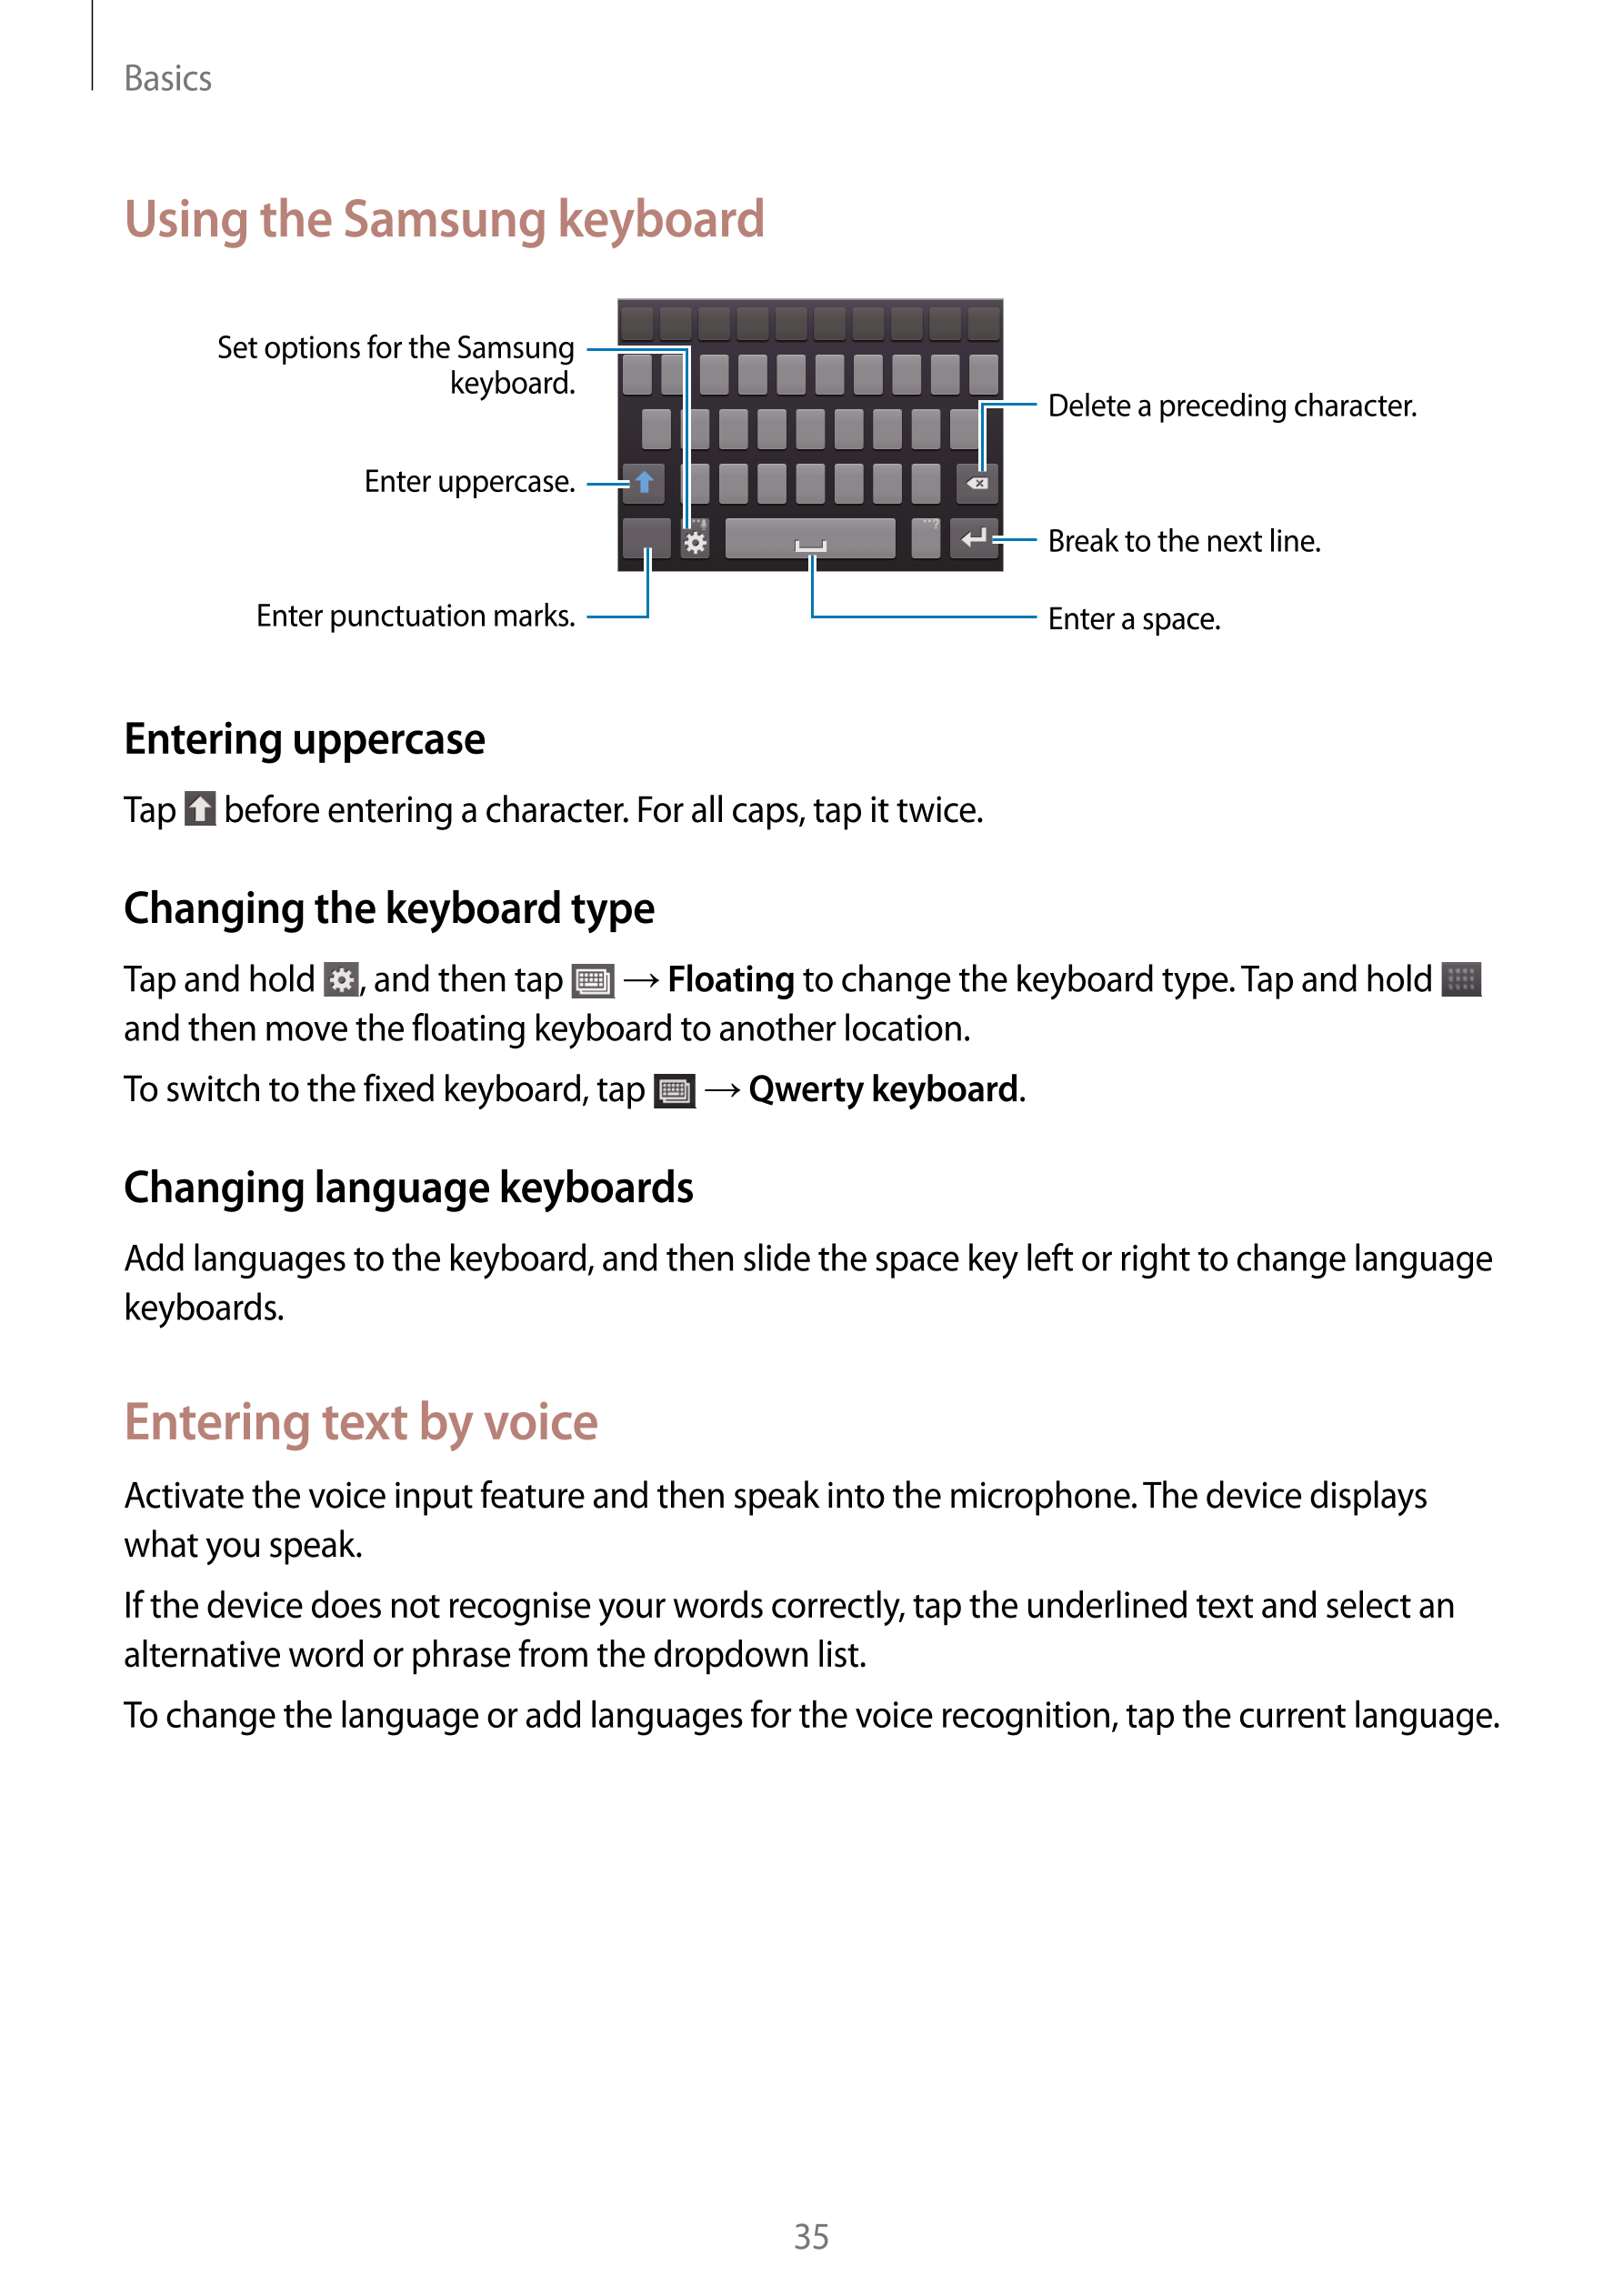 Basics
Using the Samsung keyboard
Set options for the Samsung 
keyboard.
Delete a preceding character.
Enter uppercase.
Break to